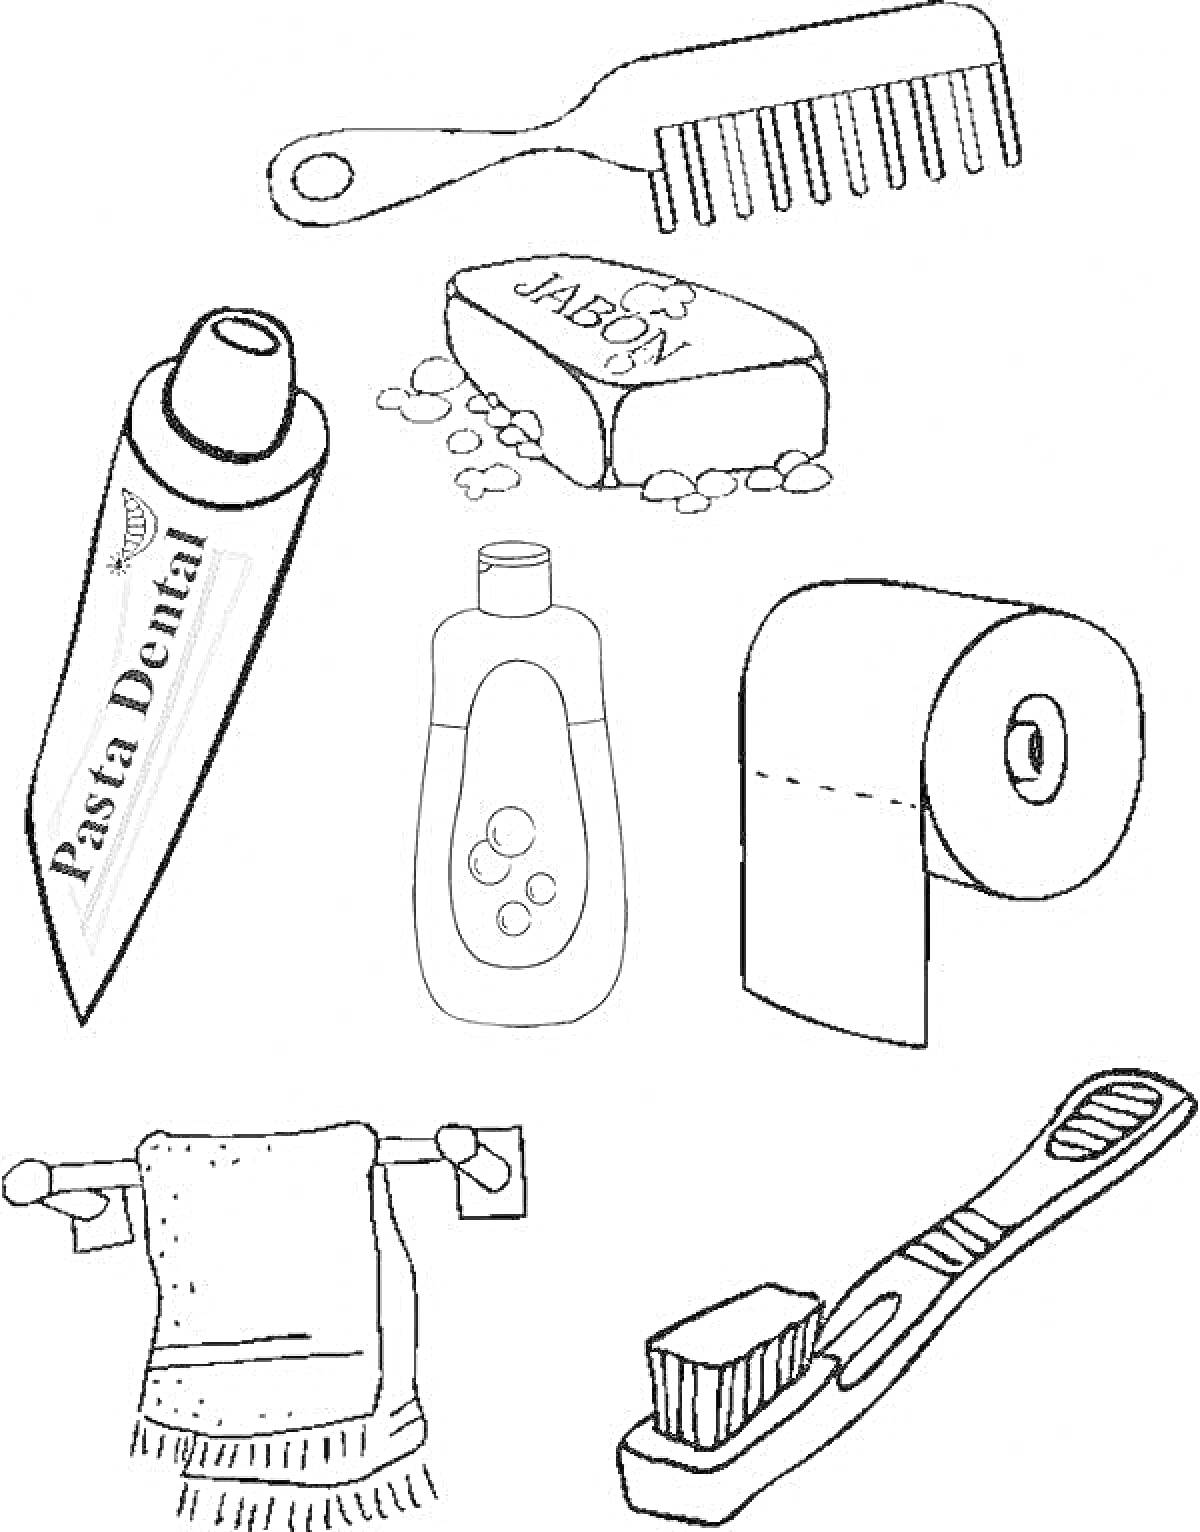 На раскраске изображено: Зубная паста, Расческа, Мыло, Шампунь, Туалетная бумага, Полотенце, Зубная щетка, Ванная комната, Гигиена, Уход за собой